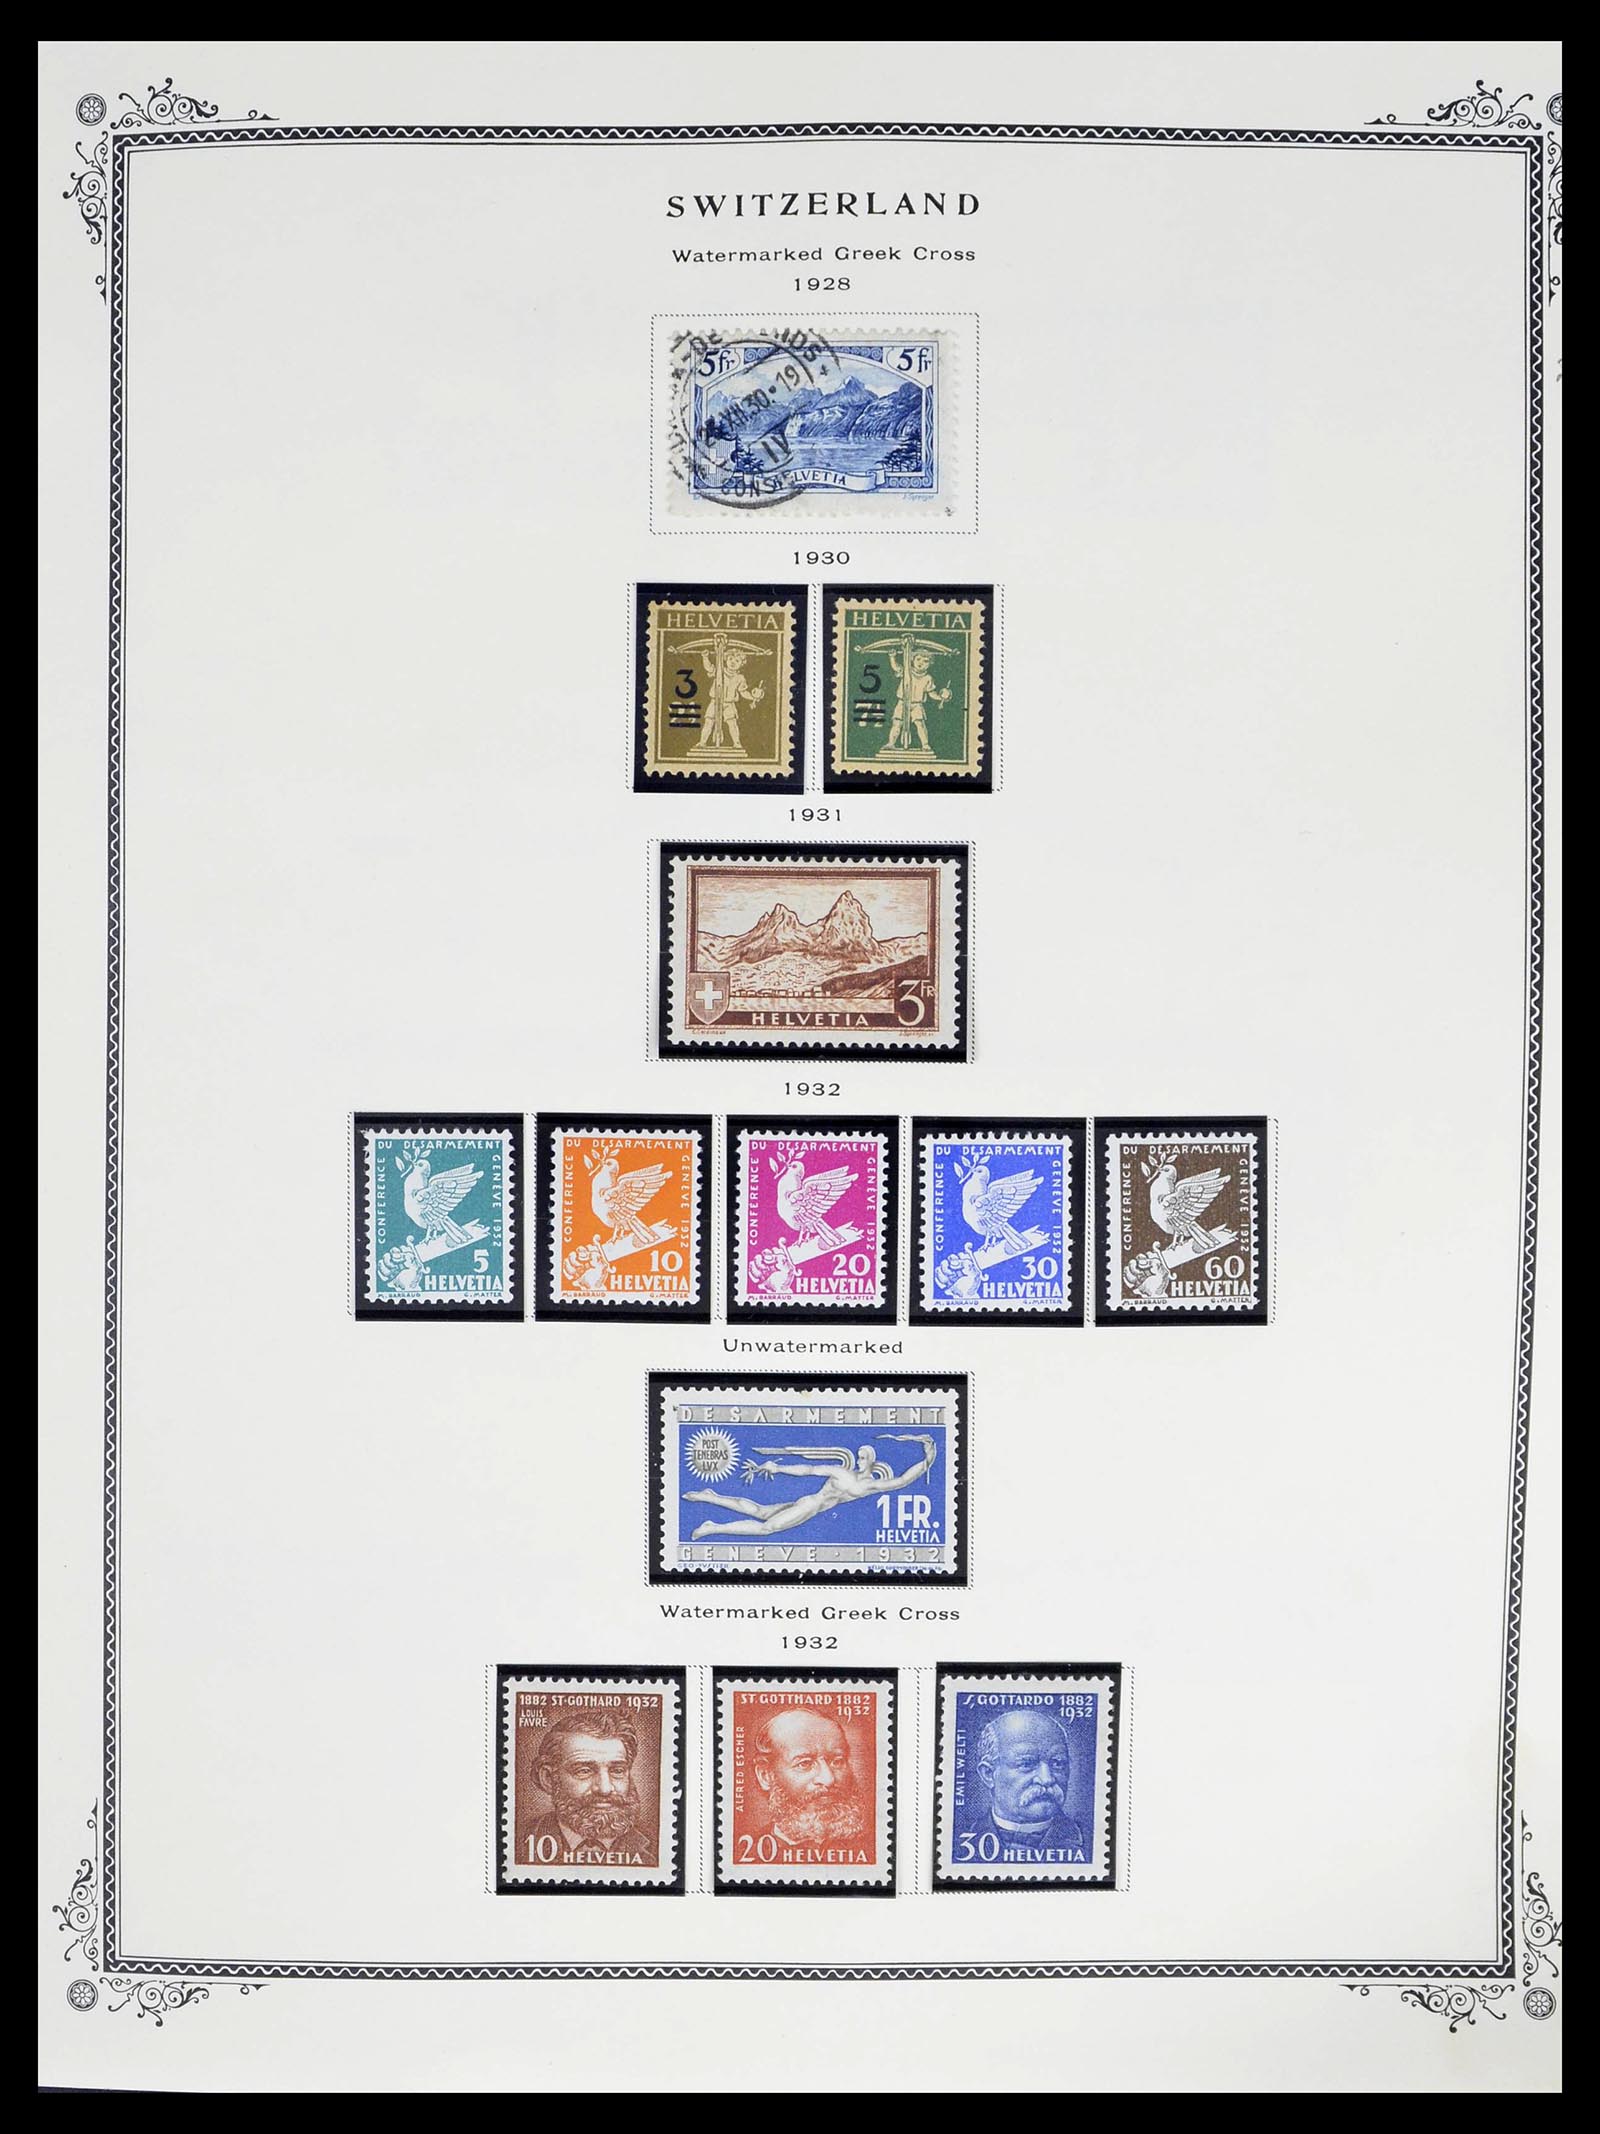 39178 0021 - Stamp collection 39178 Switzerland 1850-1989.